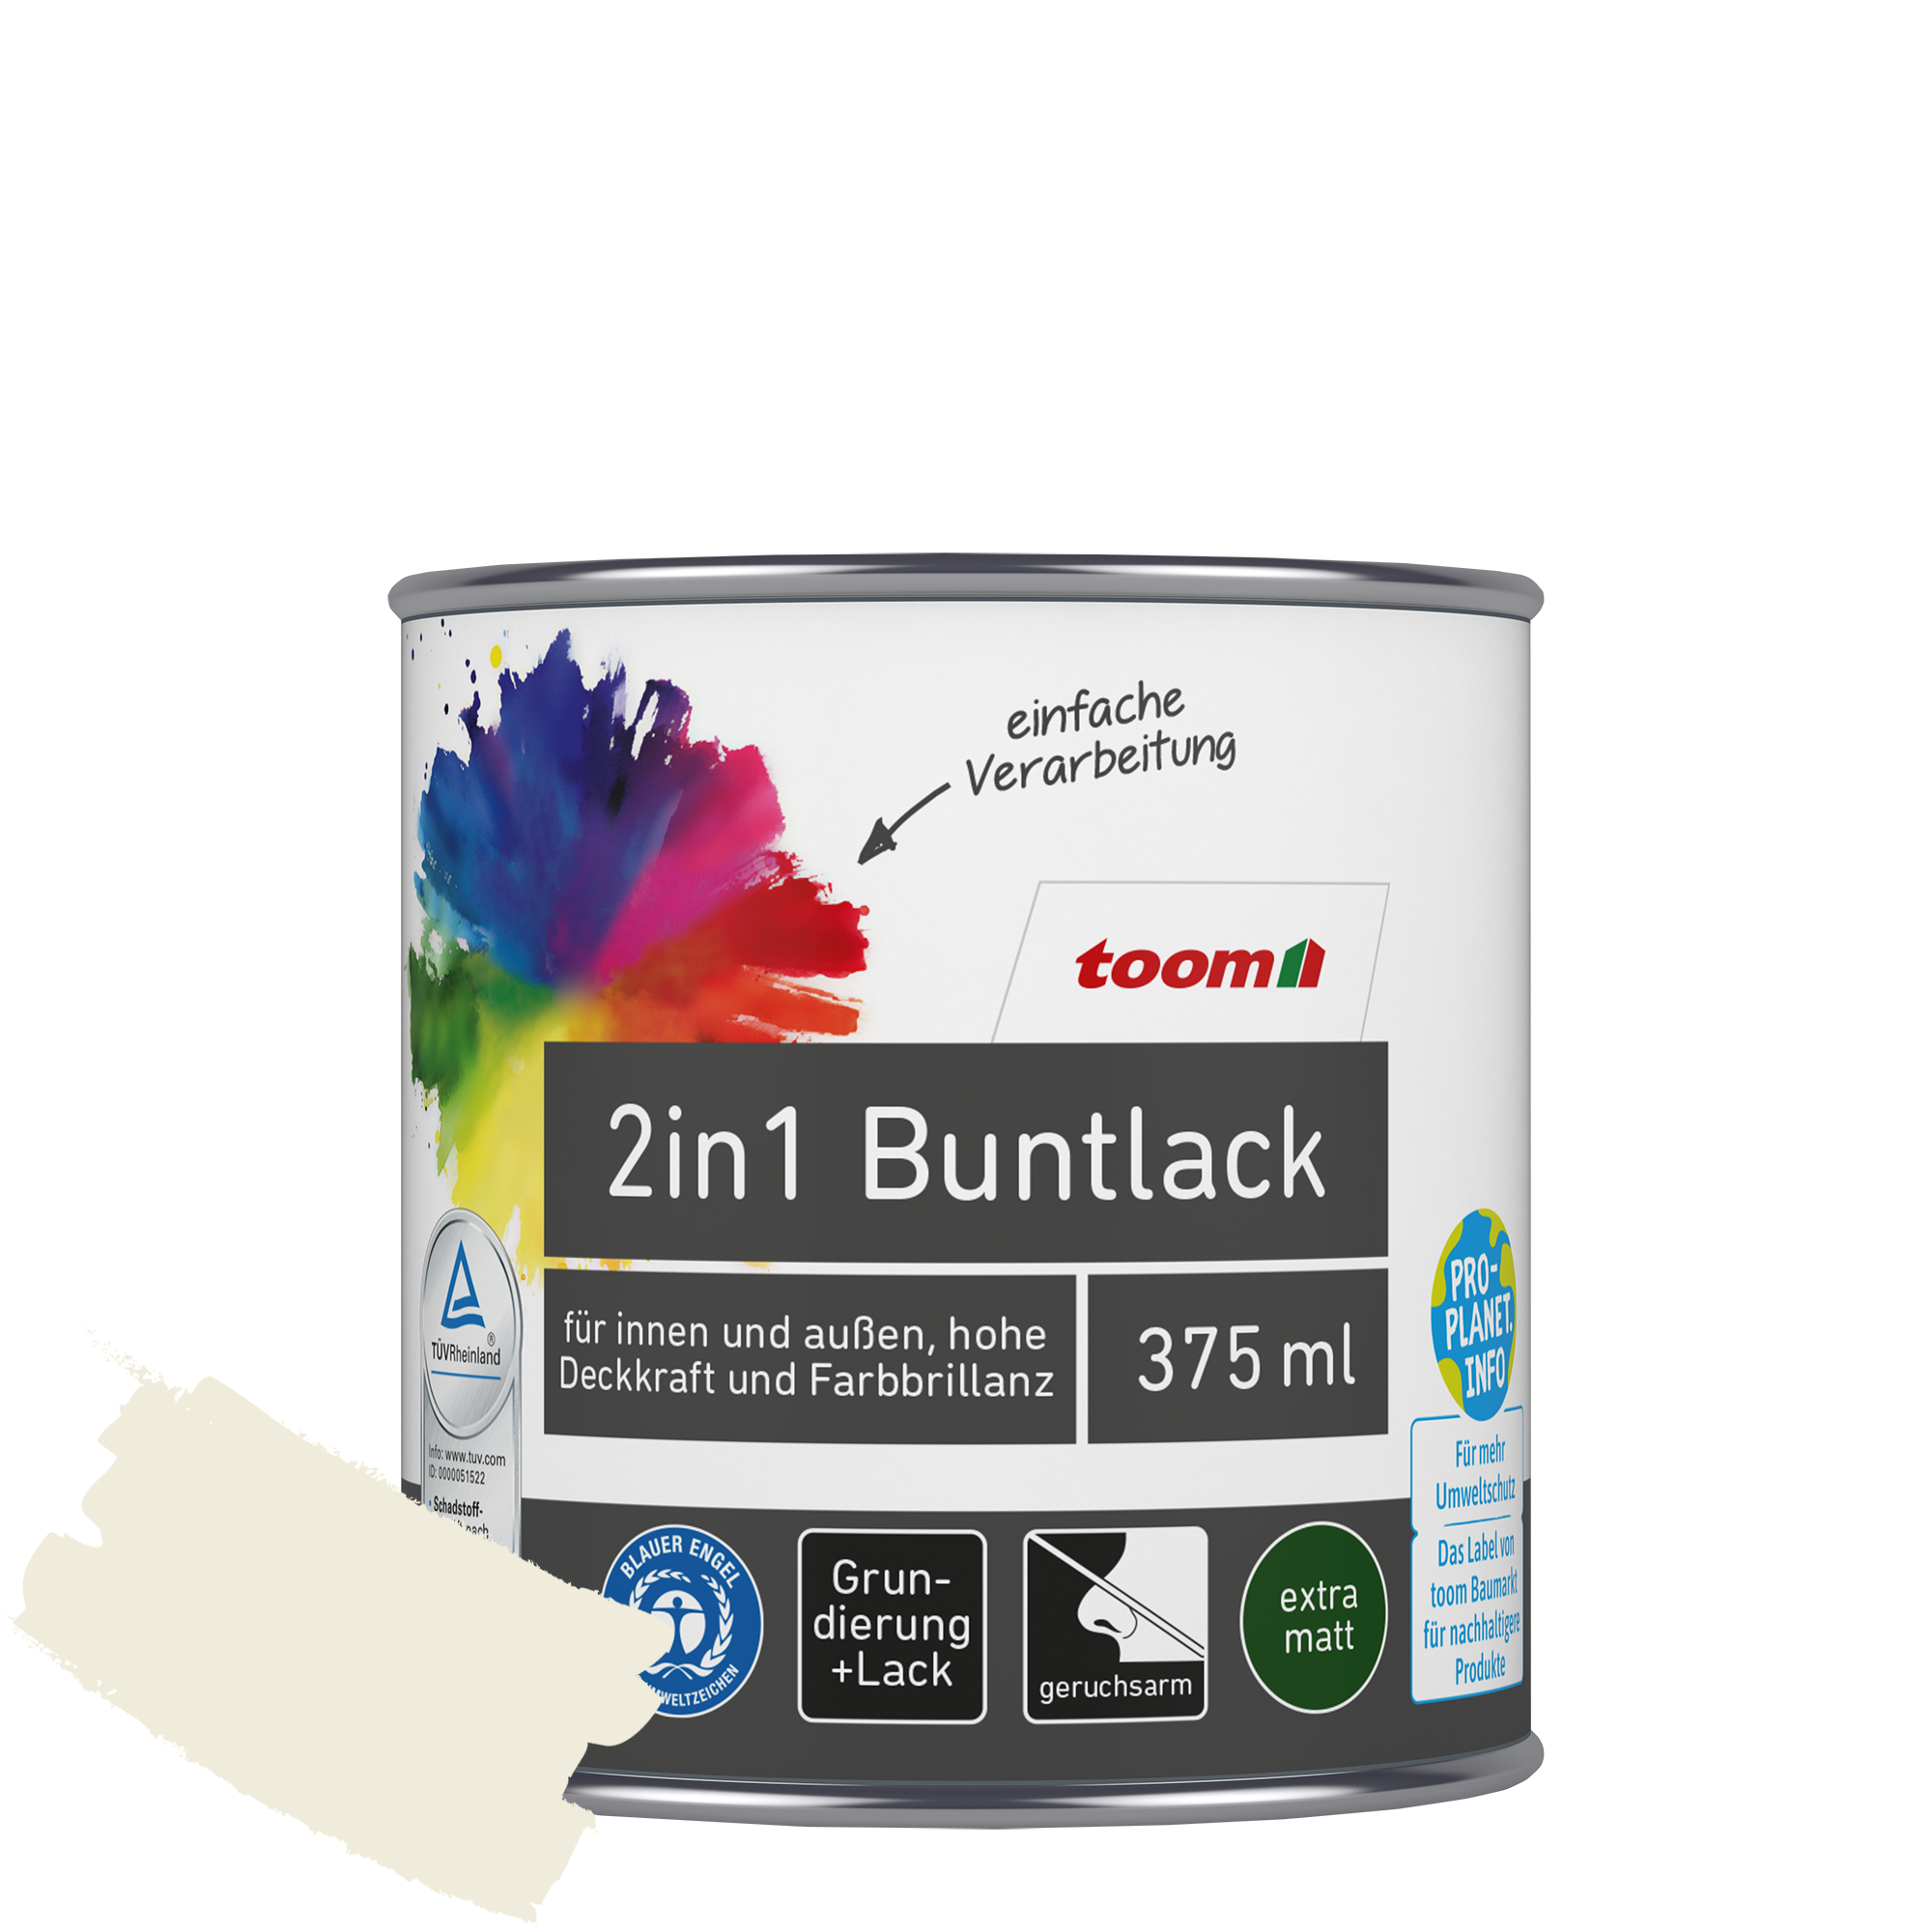 2in1 Buntlack 'Eisblume' weiß matt 375 ml + product picture